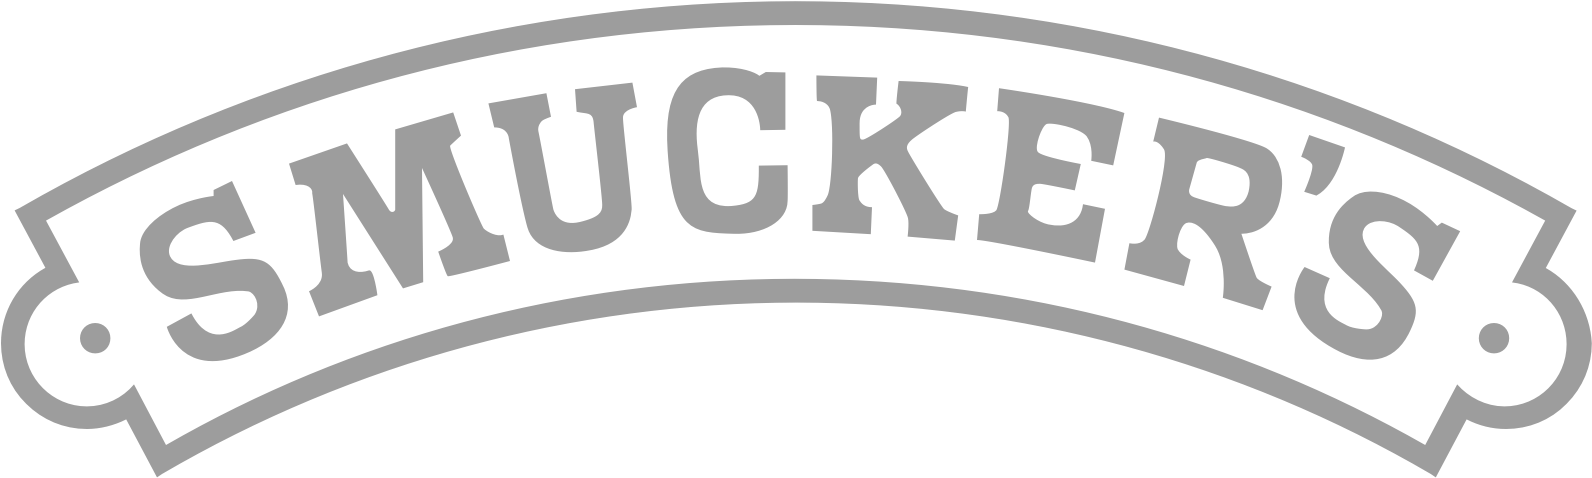 smucker-foodservice-vector-logo.png